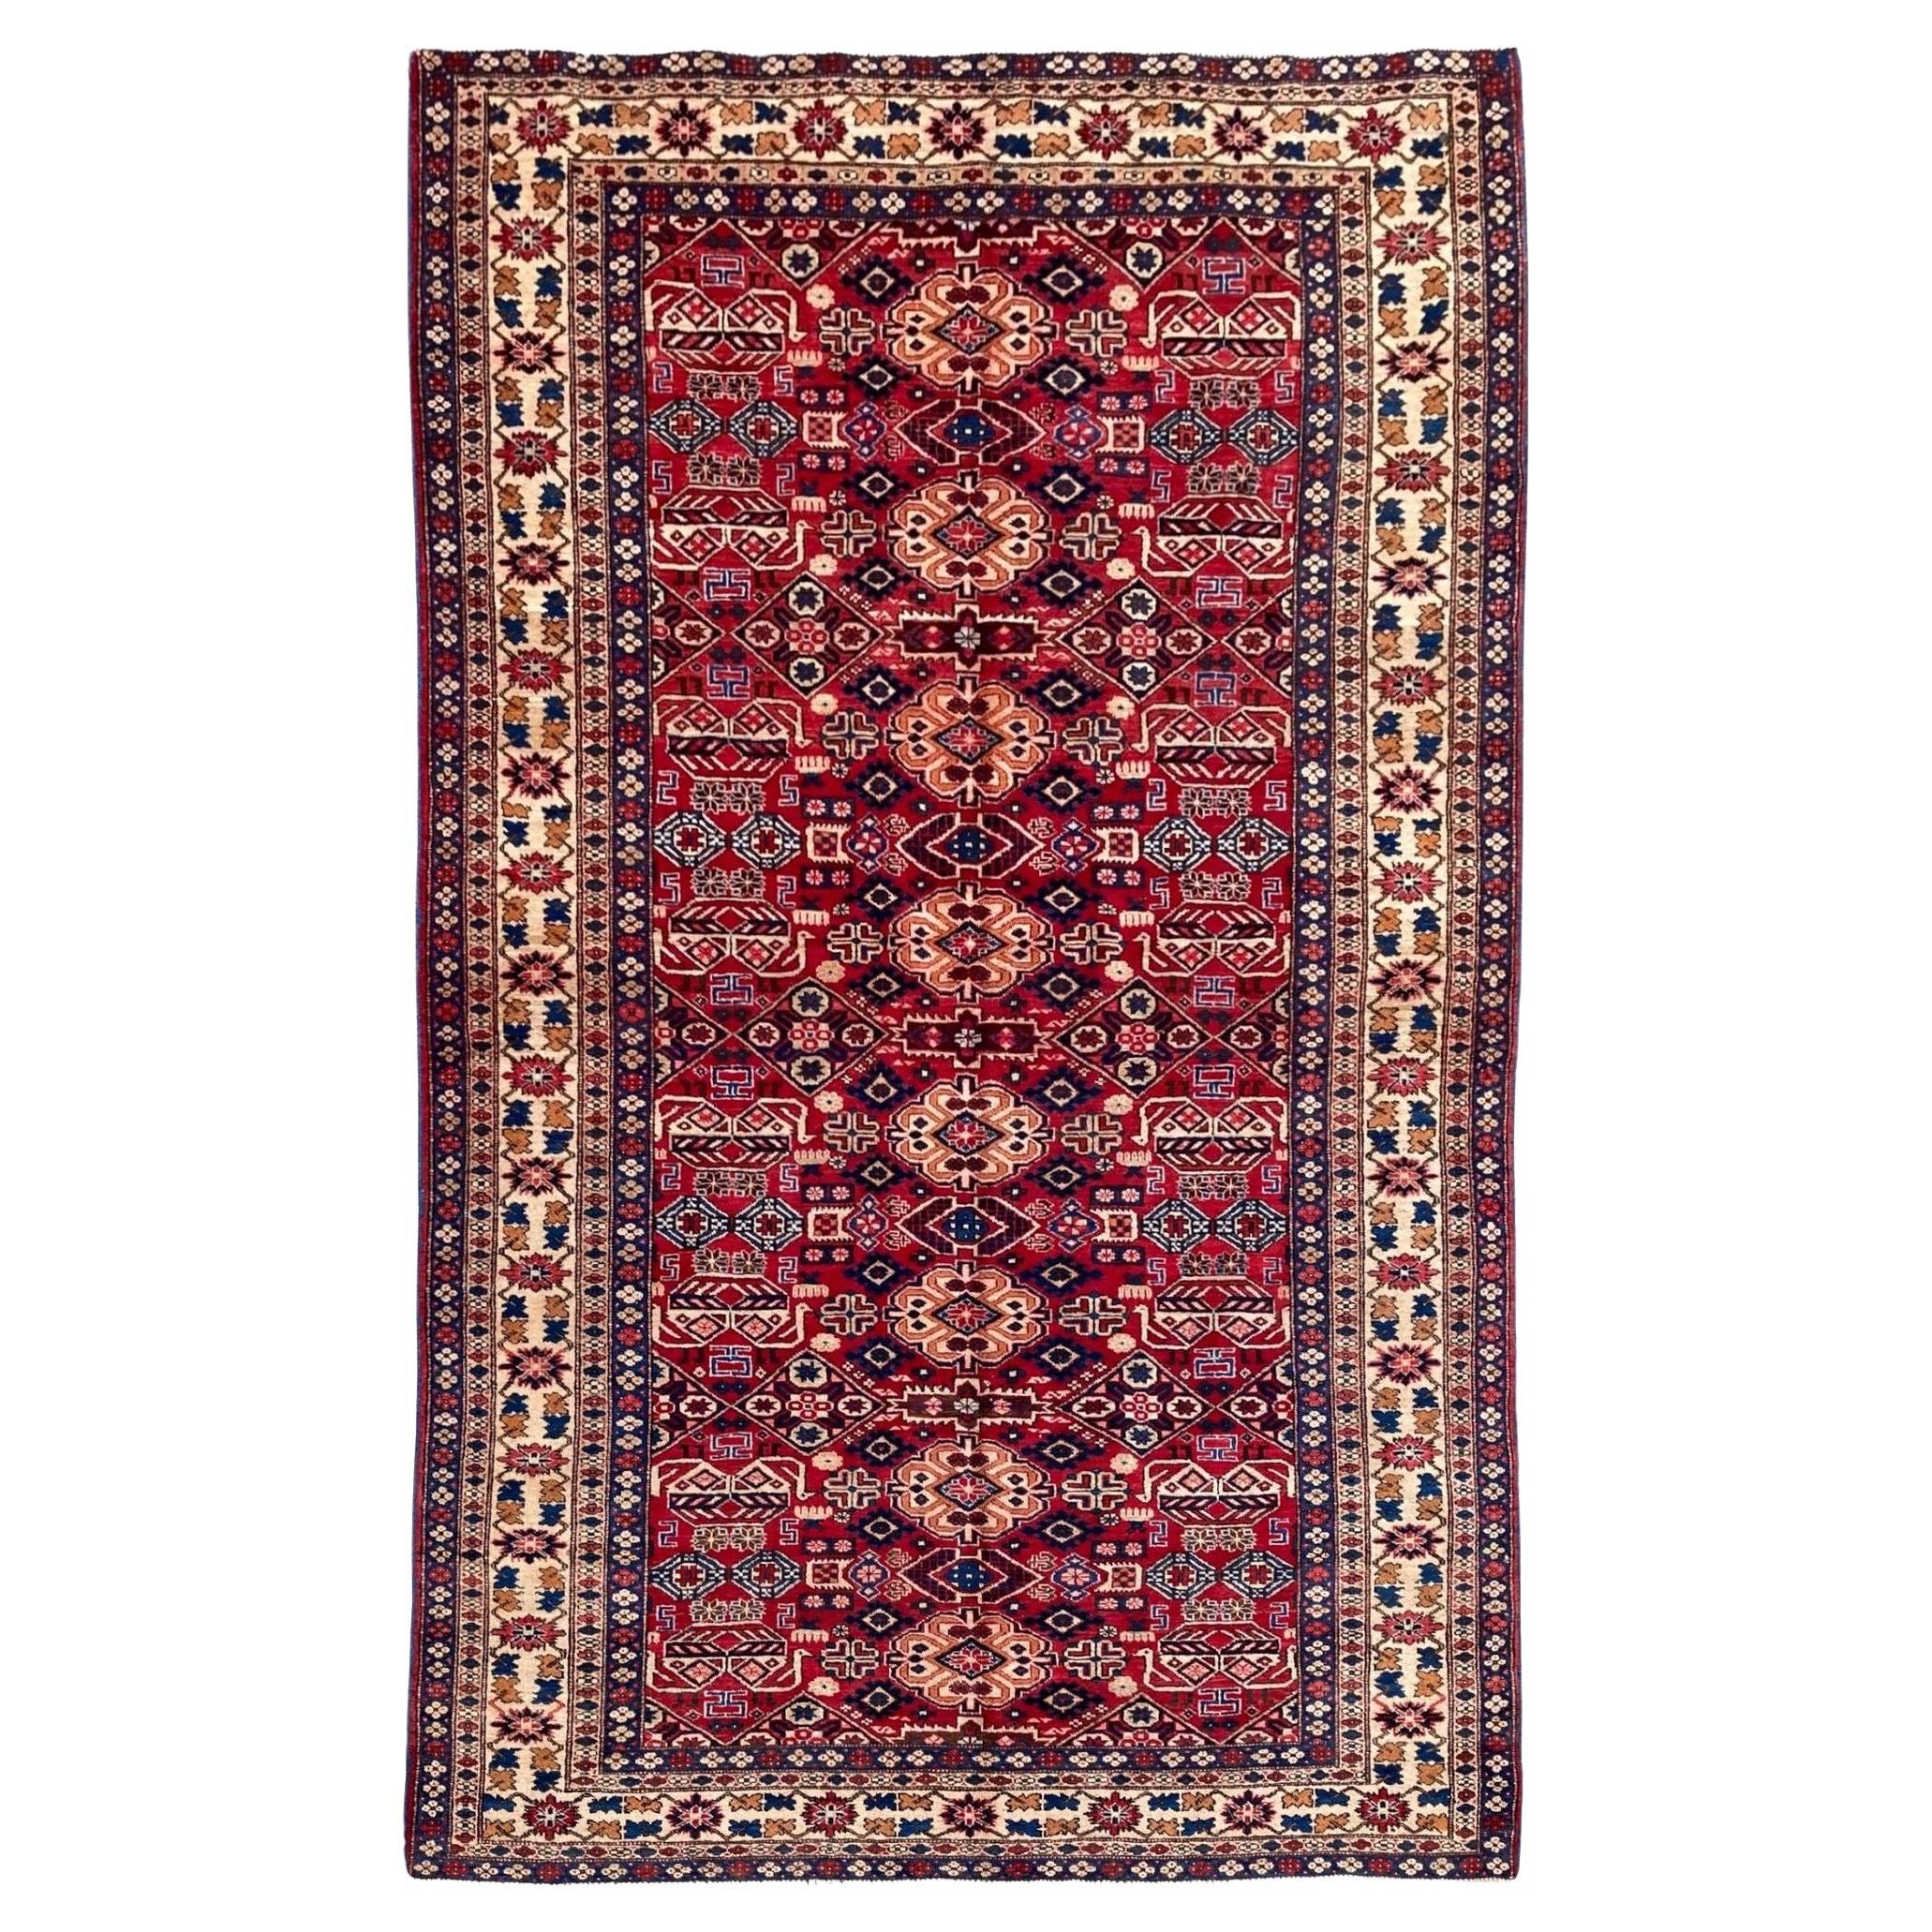 Antique Caucasian Shirvan Carpet 2.67m X 1.60m For Sale